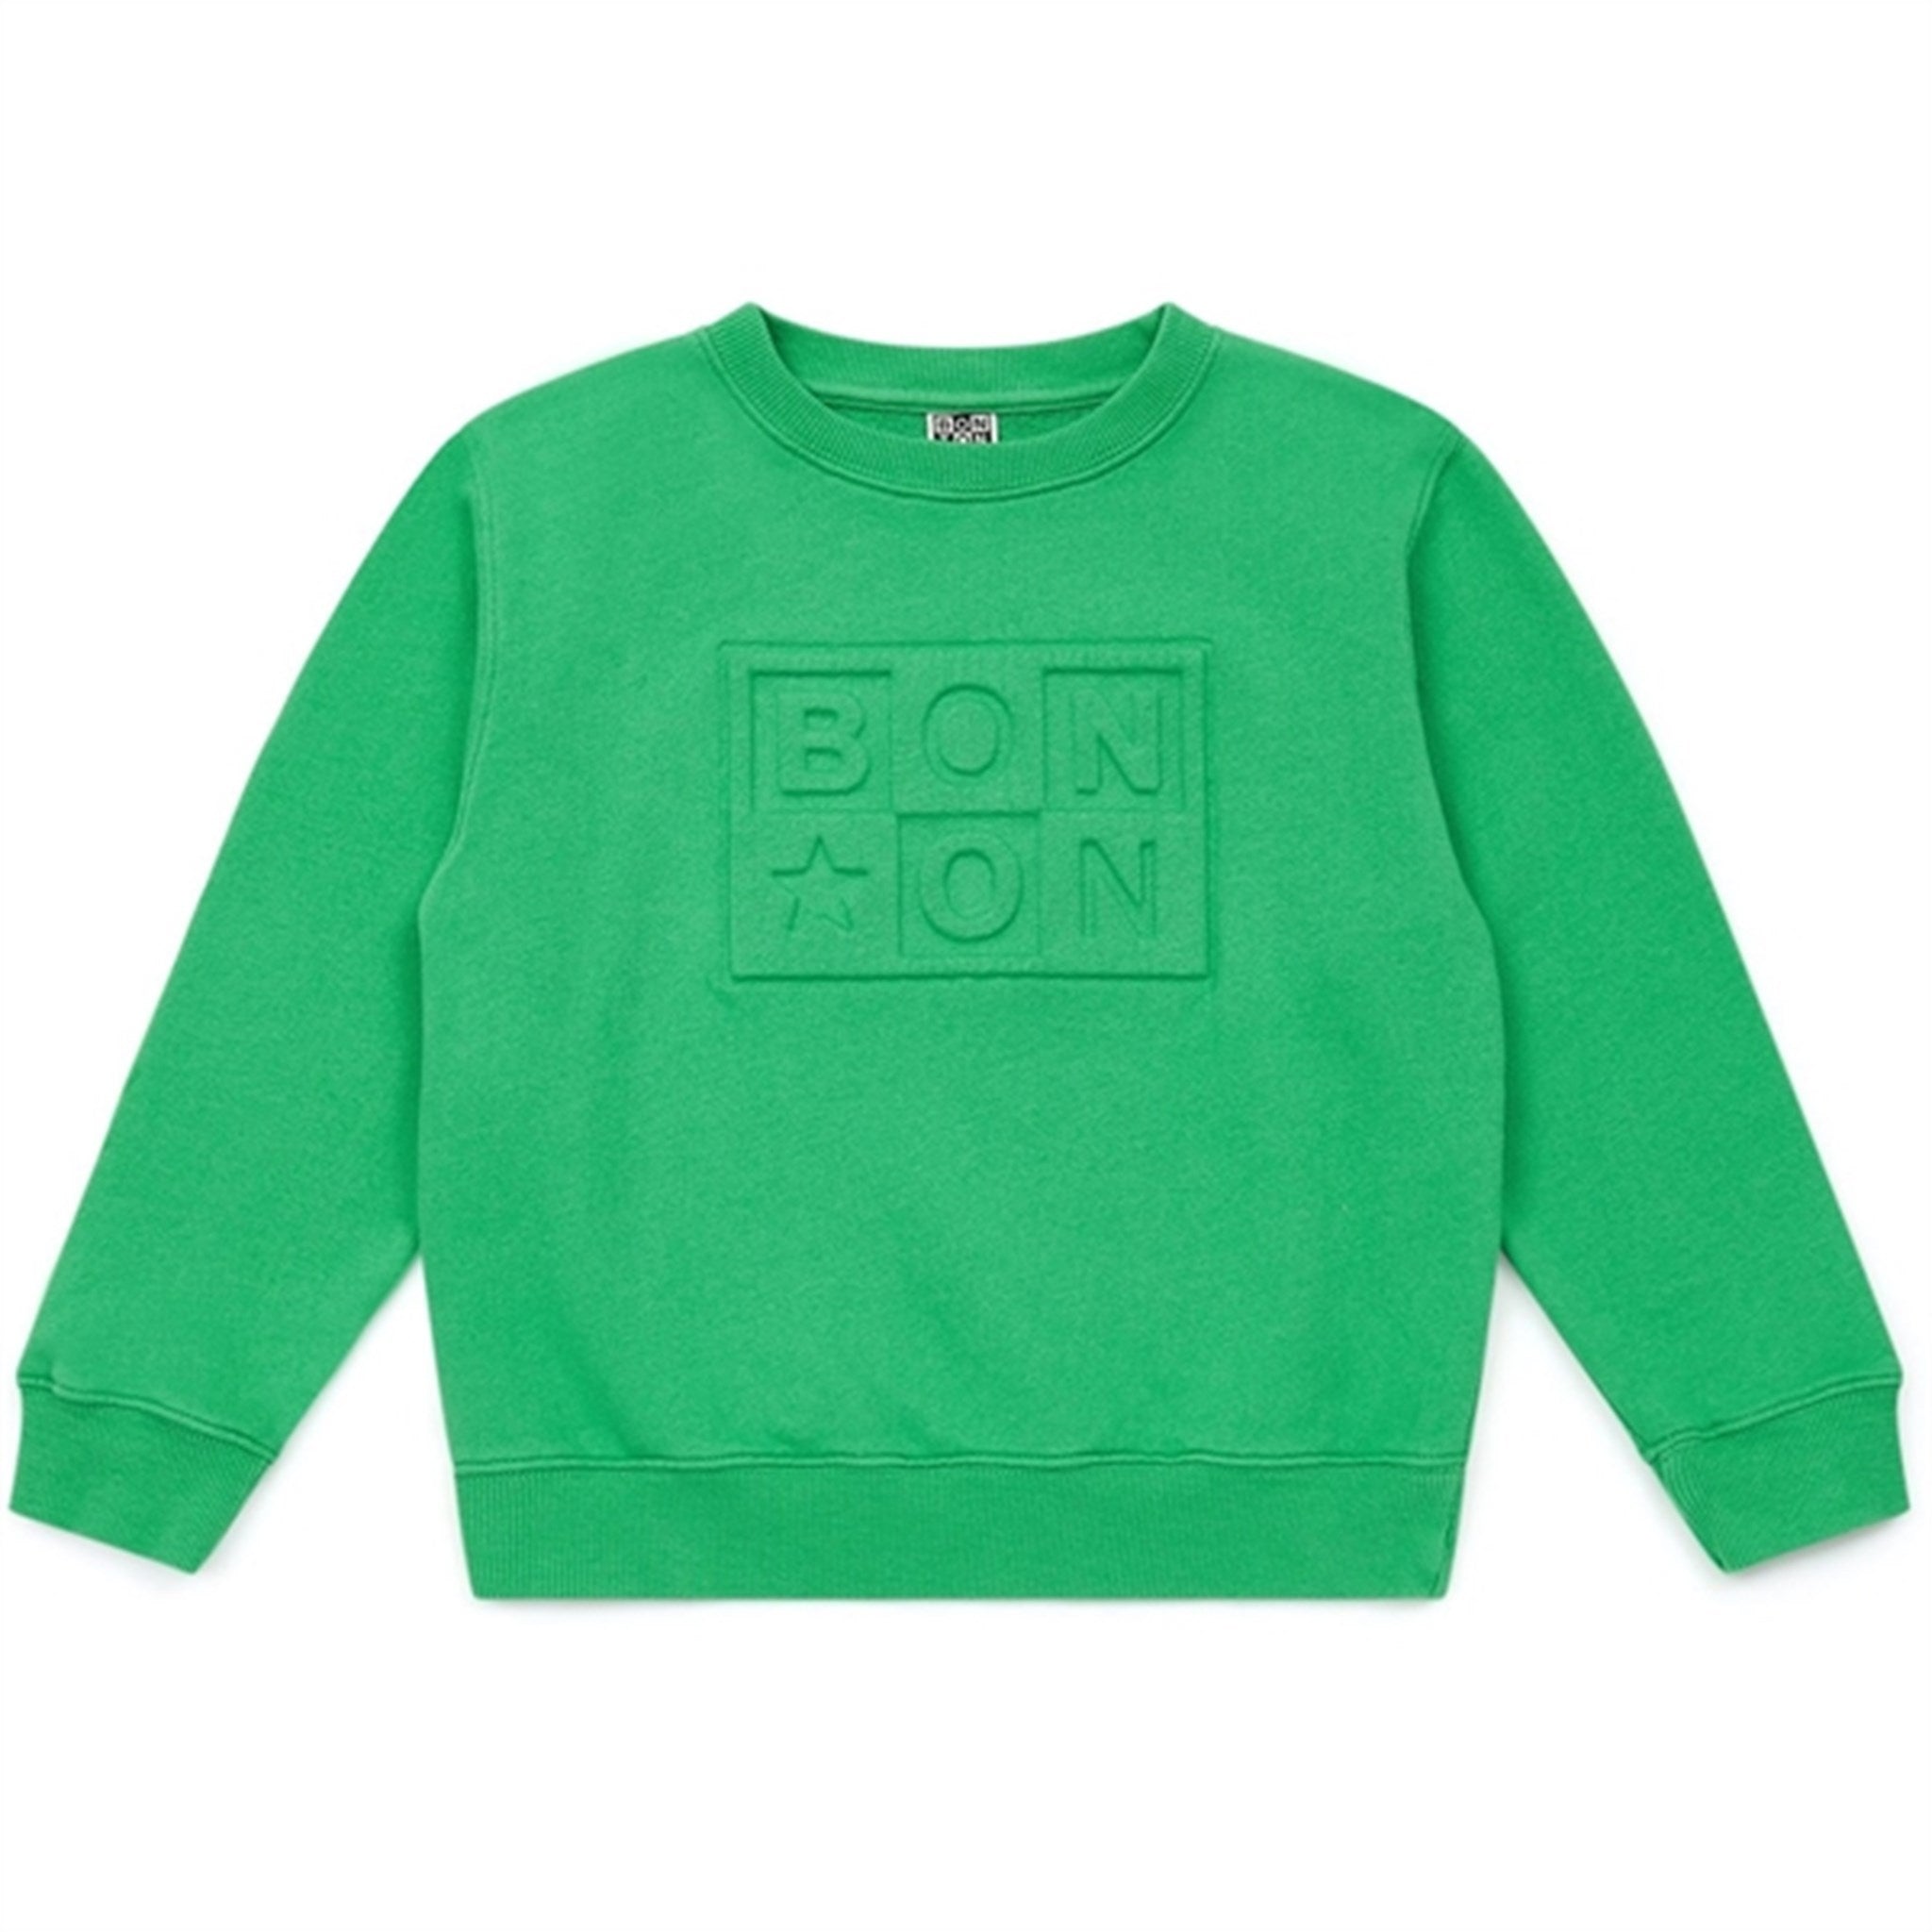 BONTON Vert Chemise Sweatshirt